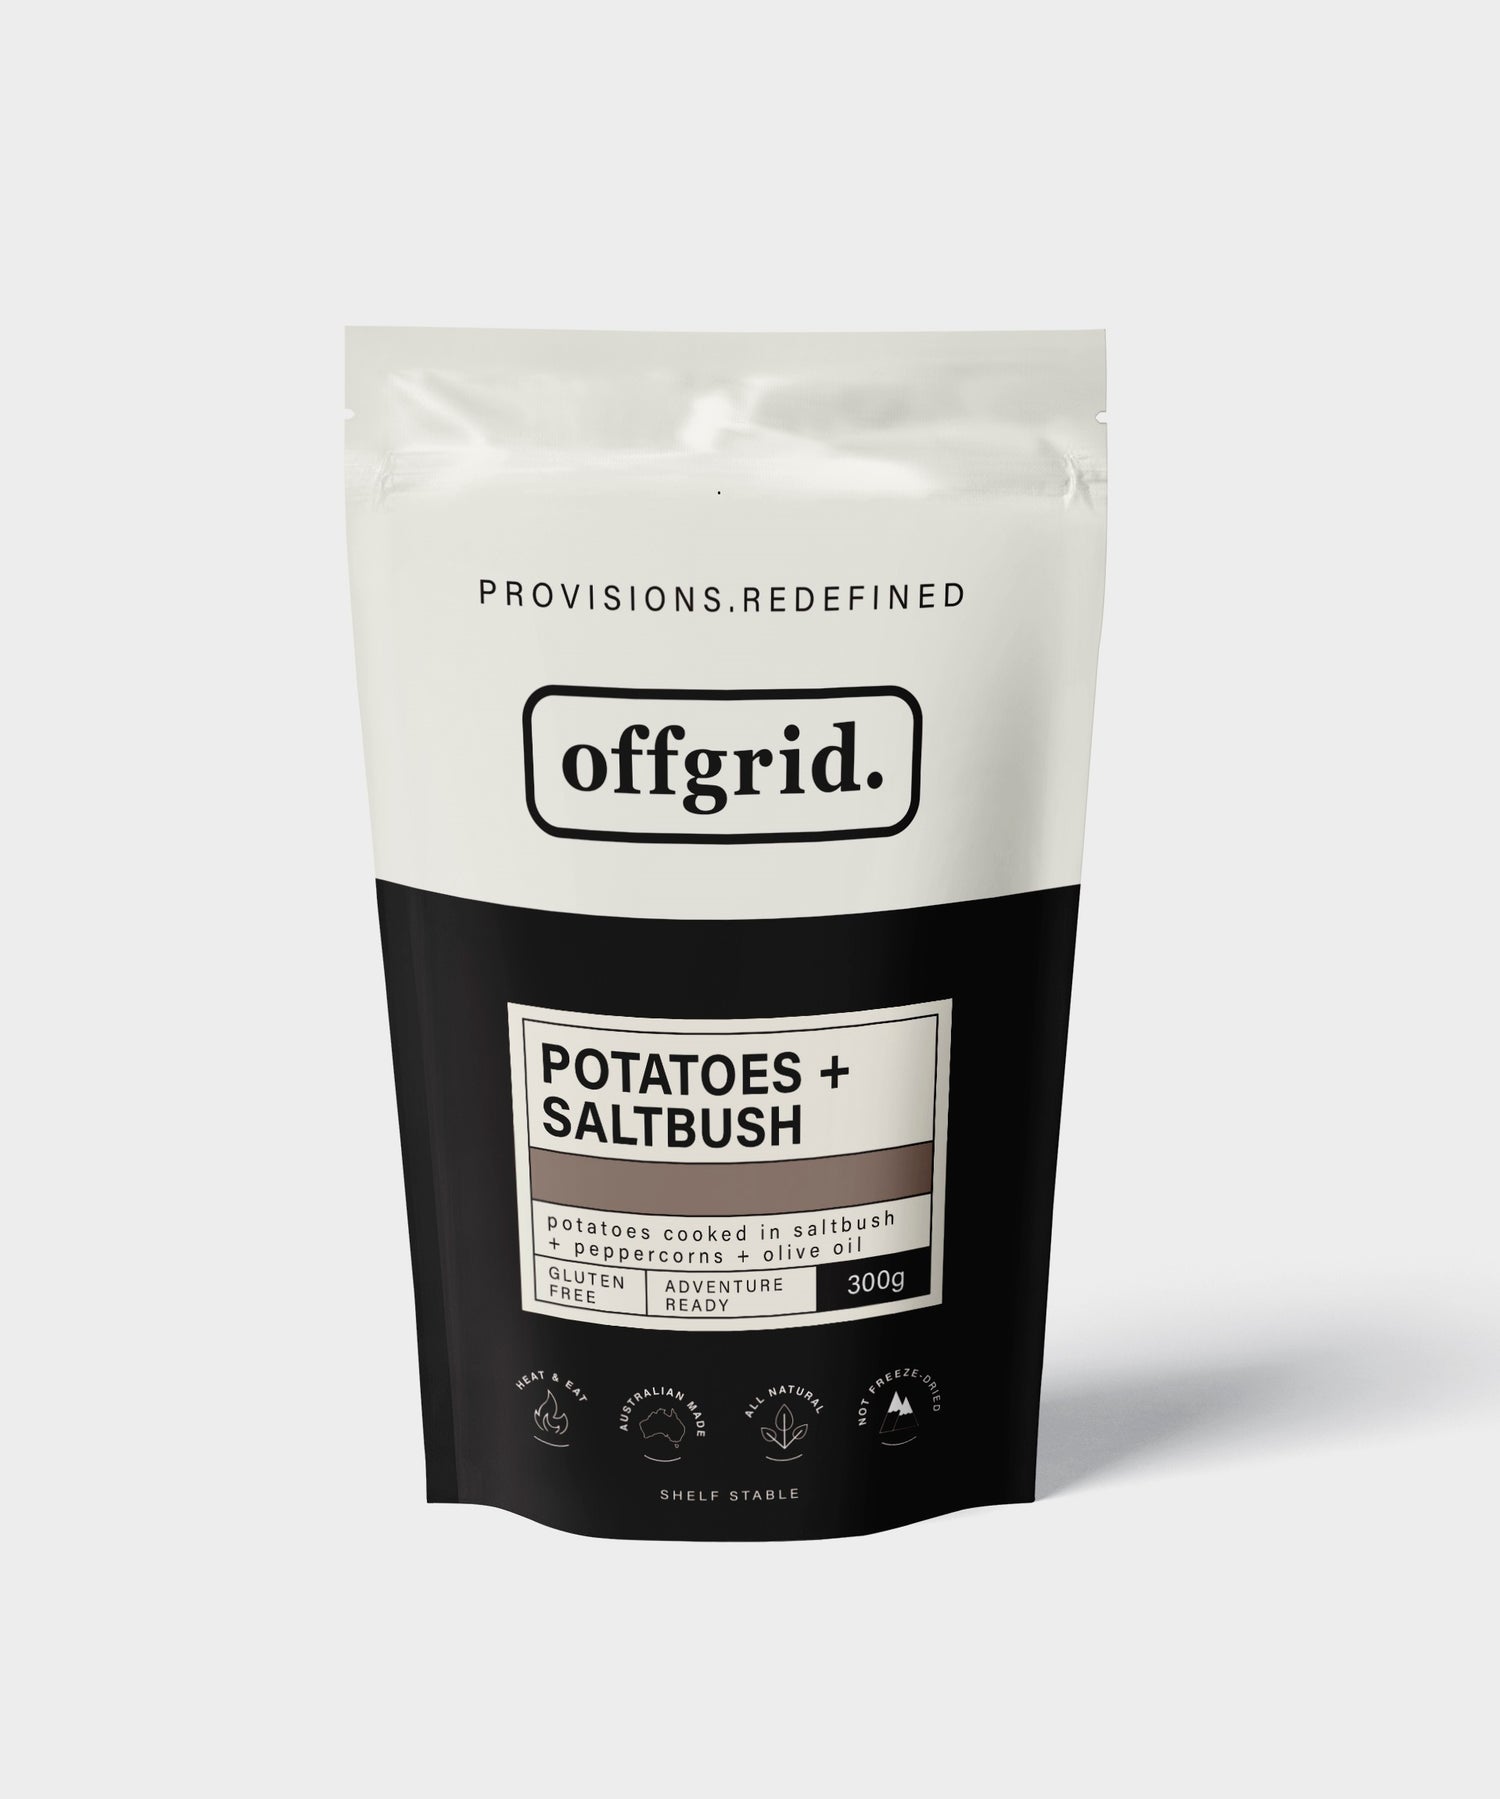 Offgrid Saltbush Potatoes Heat & Eat Meal